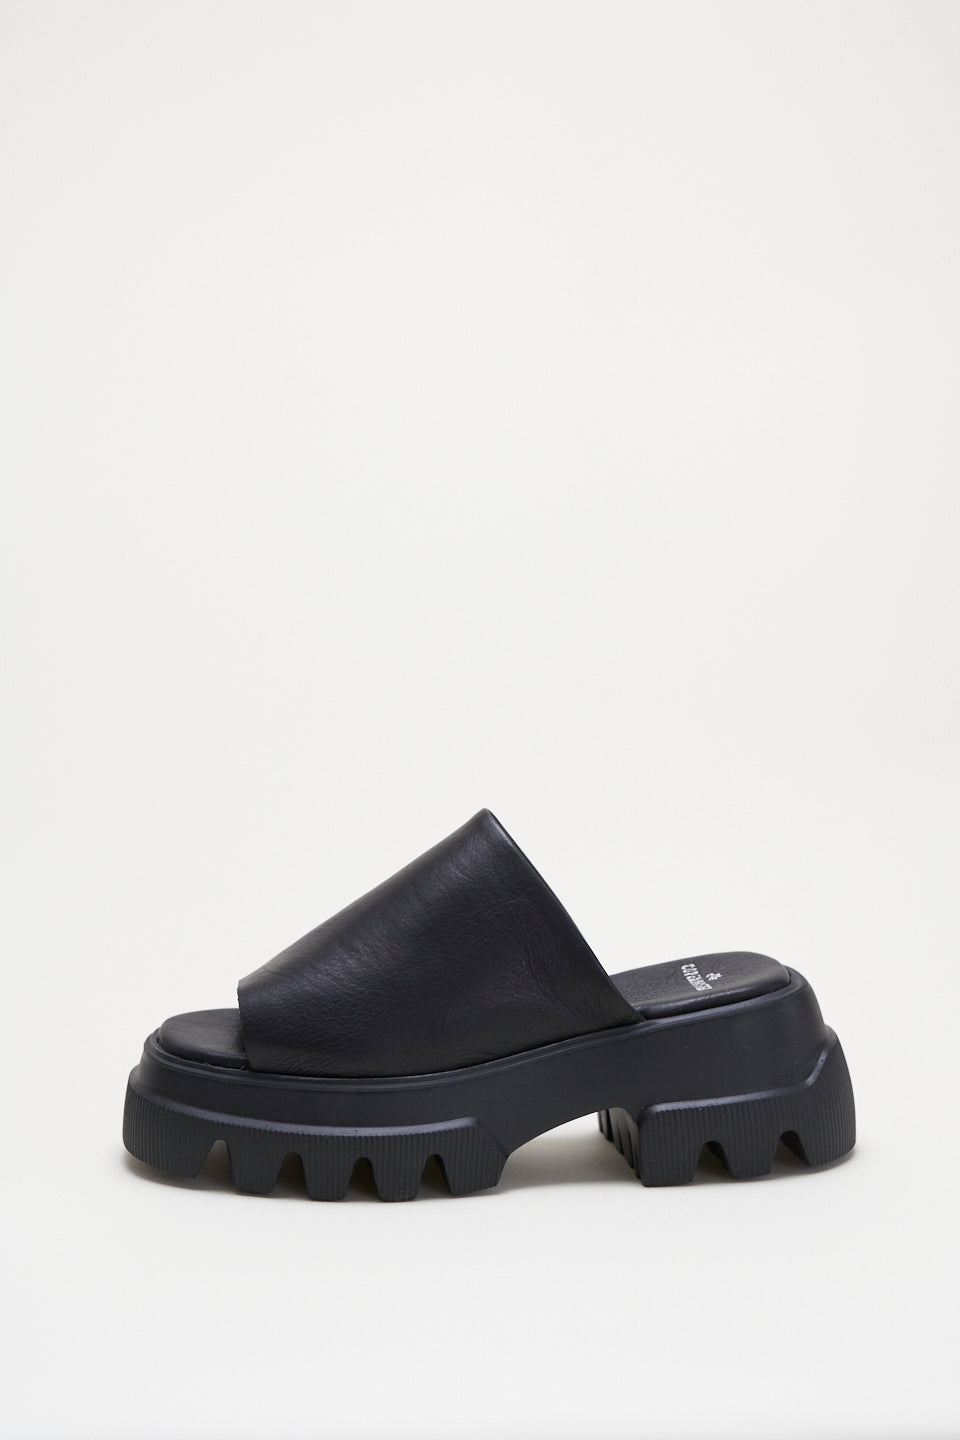 Vitello Black Chunky Slides Sandals CPH231BLACK - 6